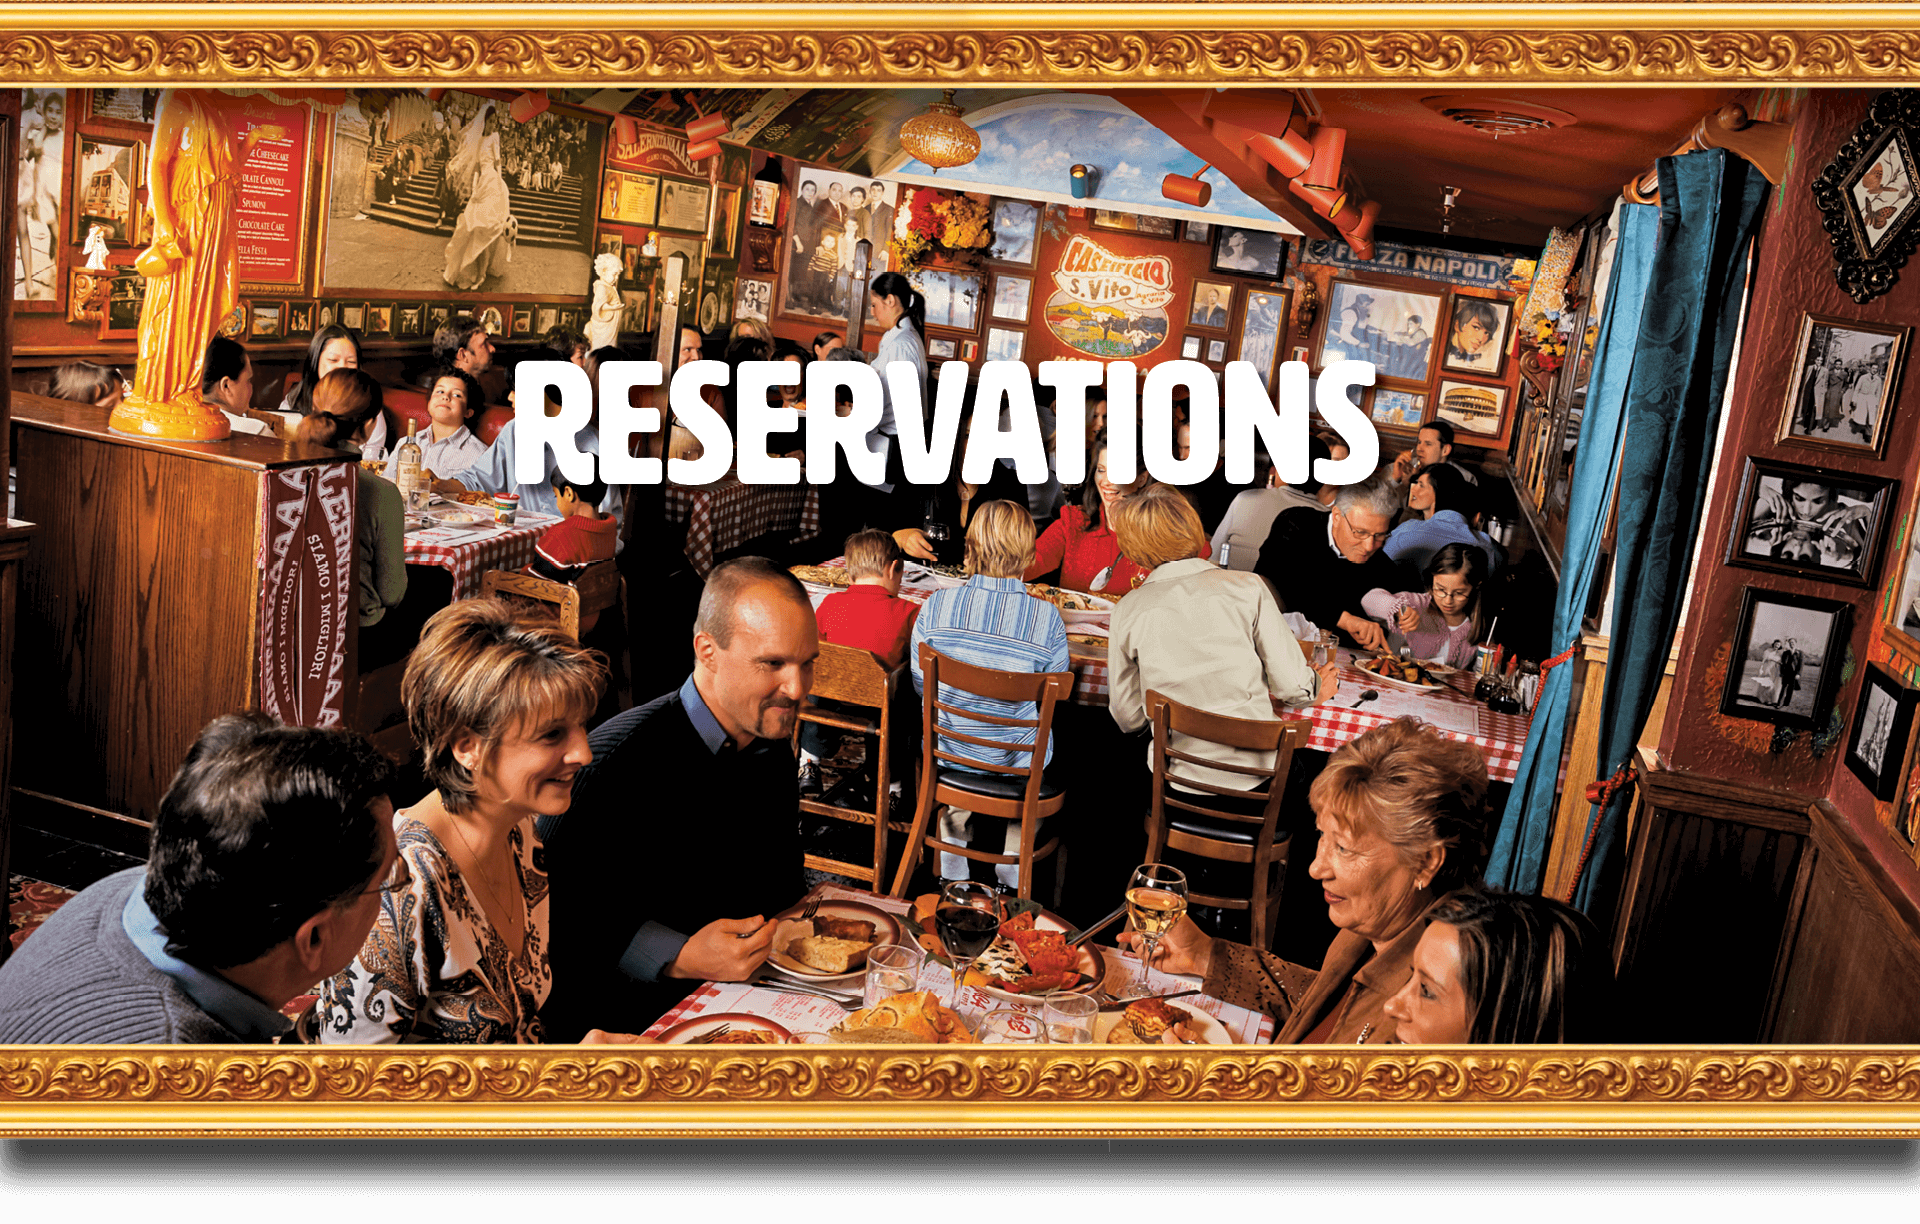 Make a reservation at Buca di Beppo.